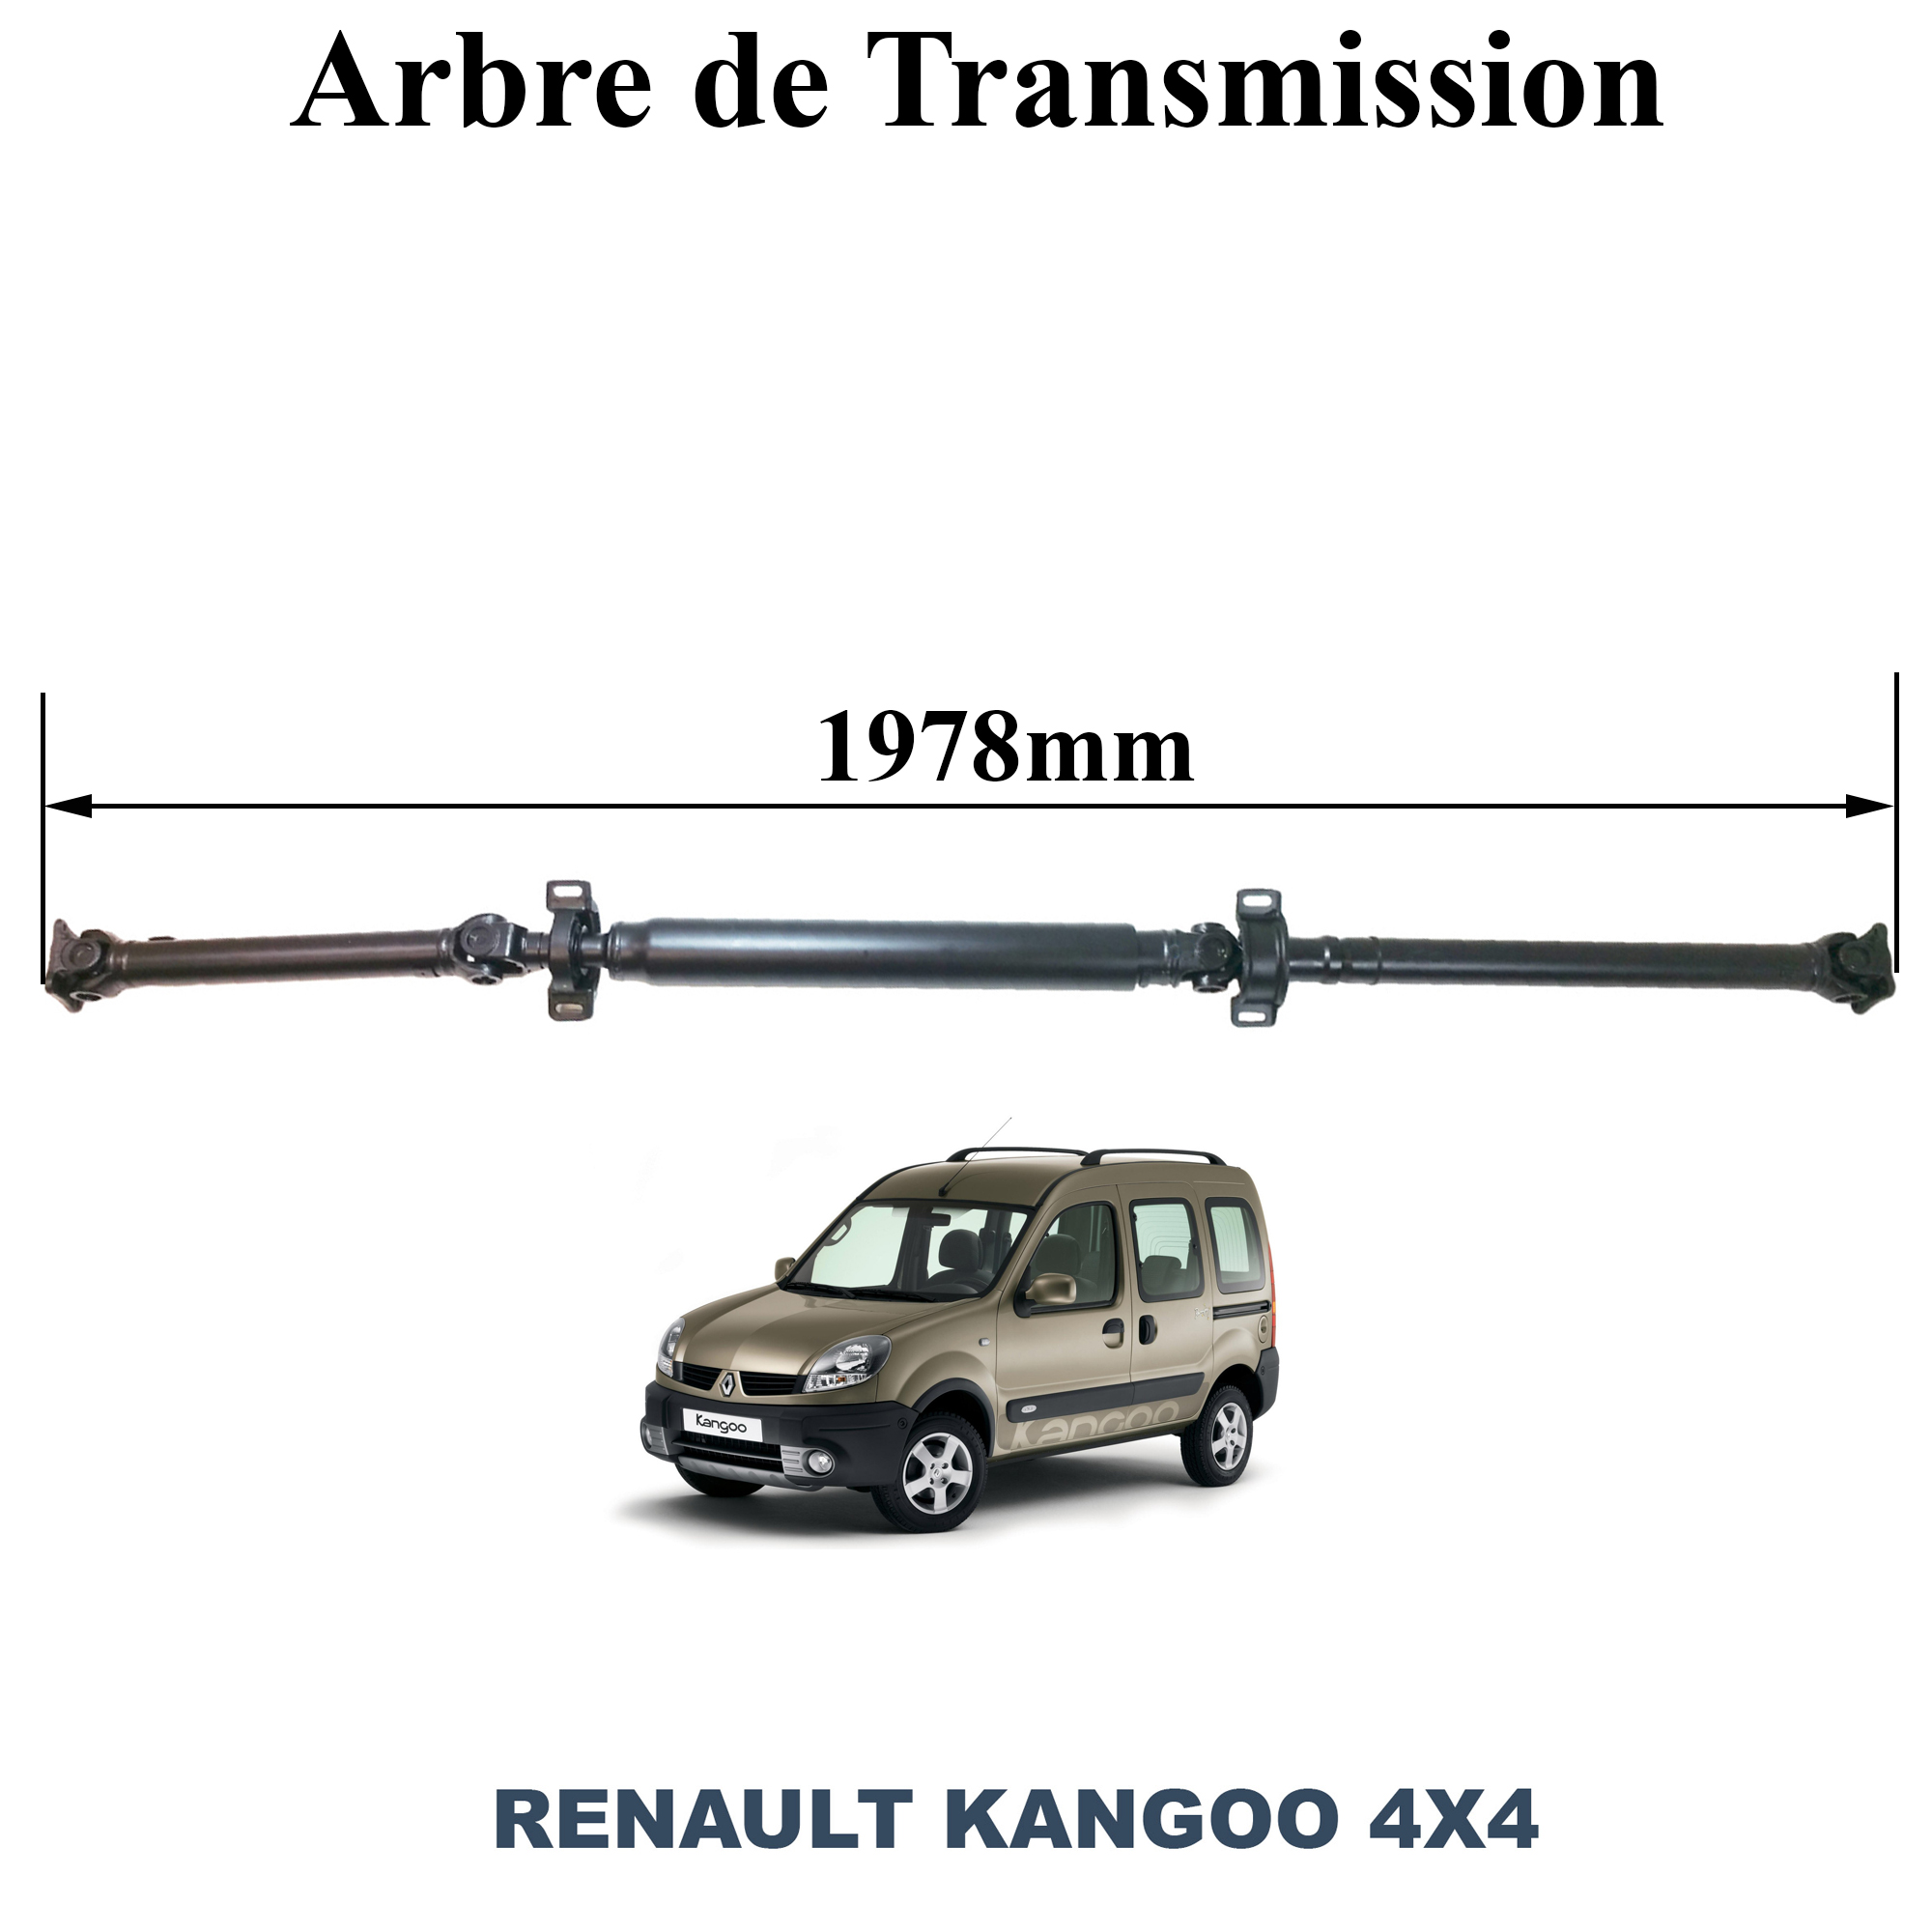 https://www.france-discount.fr/14948/arbre-de-transmission-pour-renault-kangoo-4x4-neuf-et-garanti.jpg